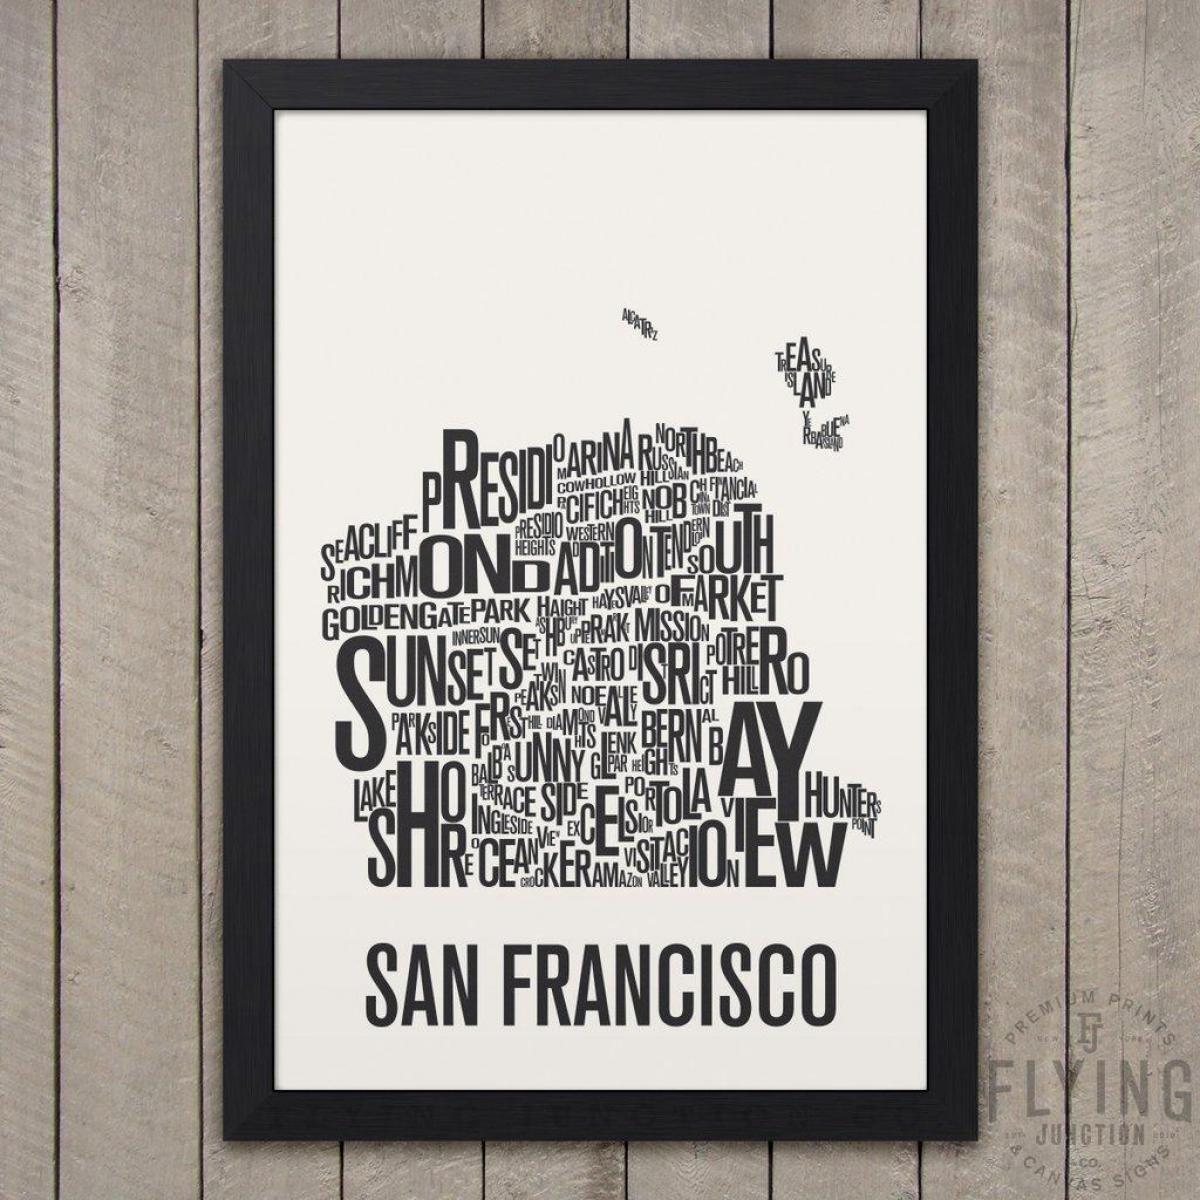 San Francisco prent kort